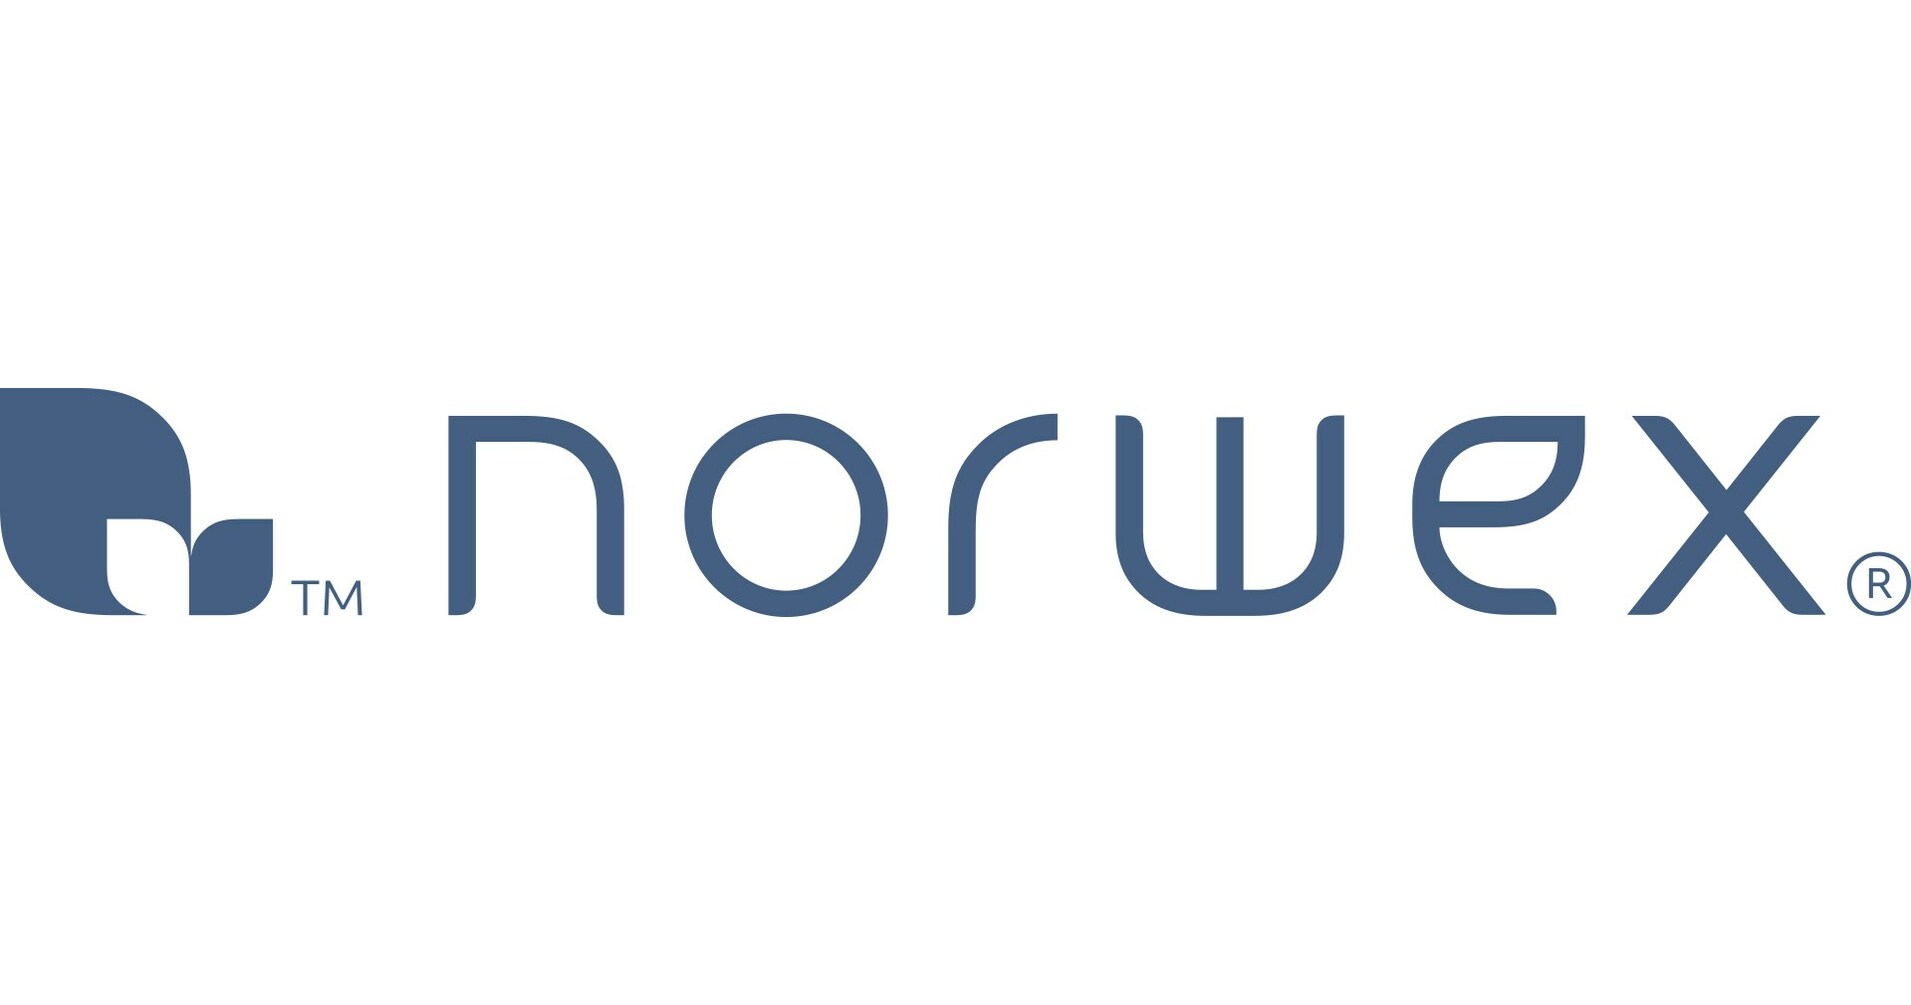 Introducing New Norwex Skin Care Cleaner Formulas. Safer Ingredients